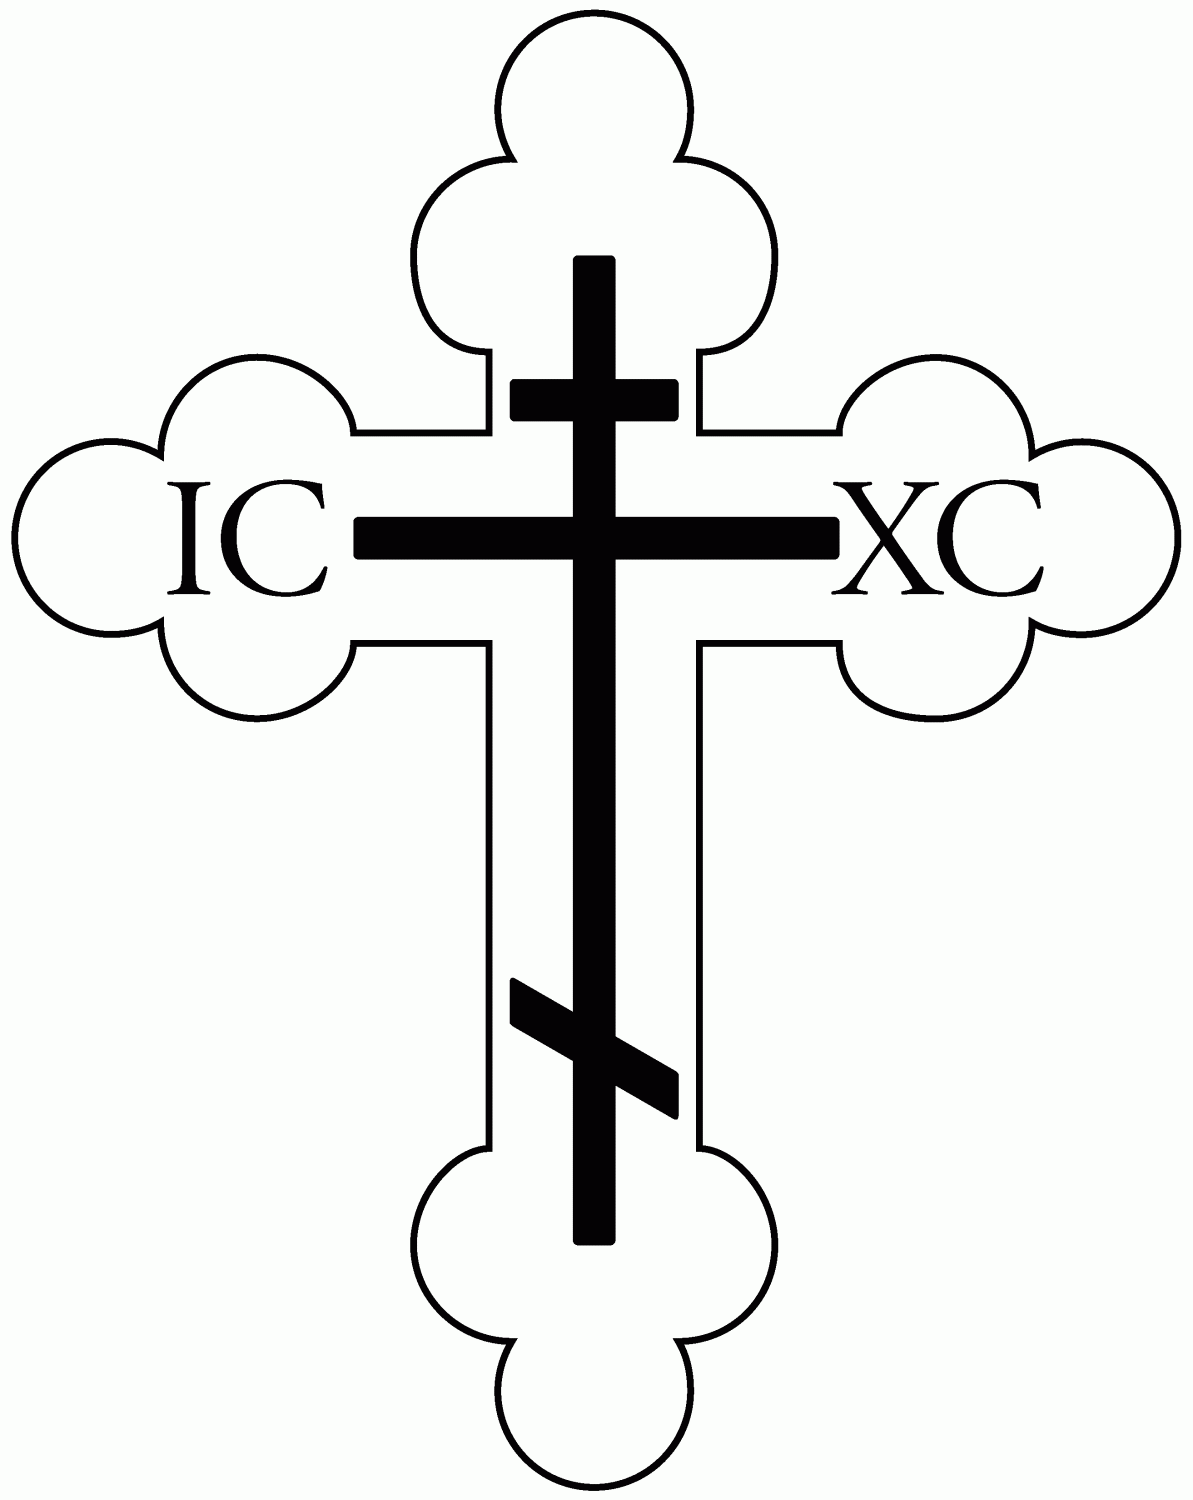 Russian orthodox on Pinterest | Crosses, Cross Tattoos and ...